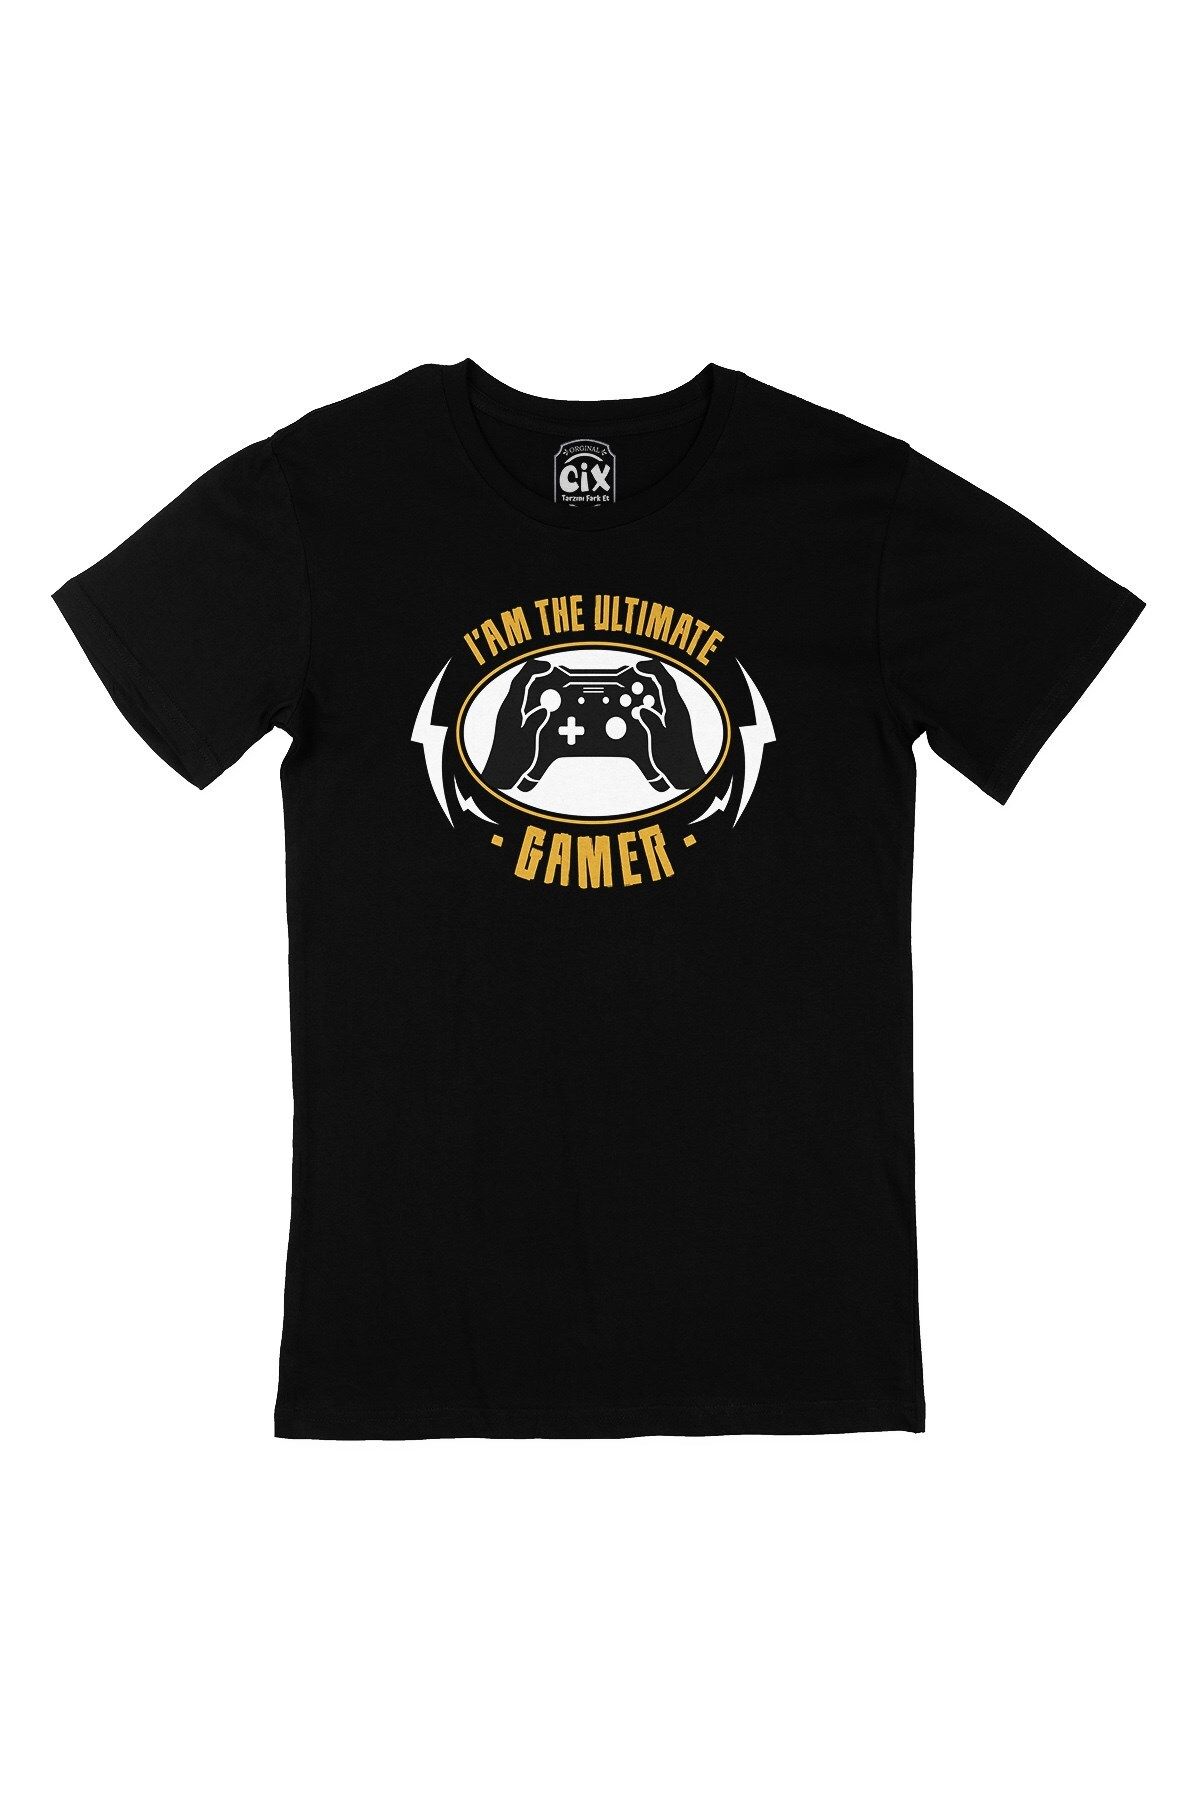 Cix Ultimate Gamer Siyah Tişört